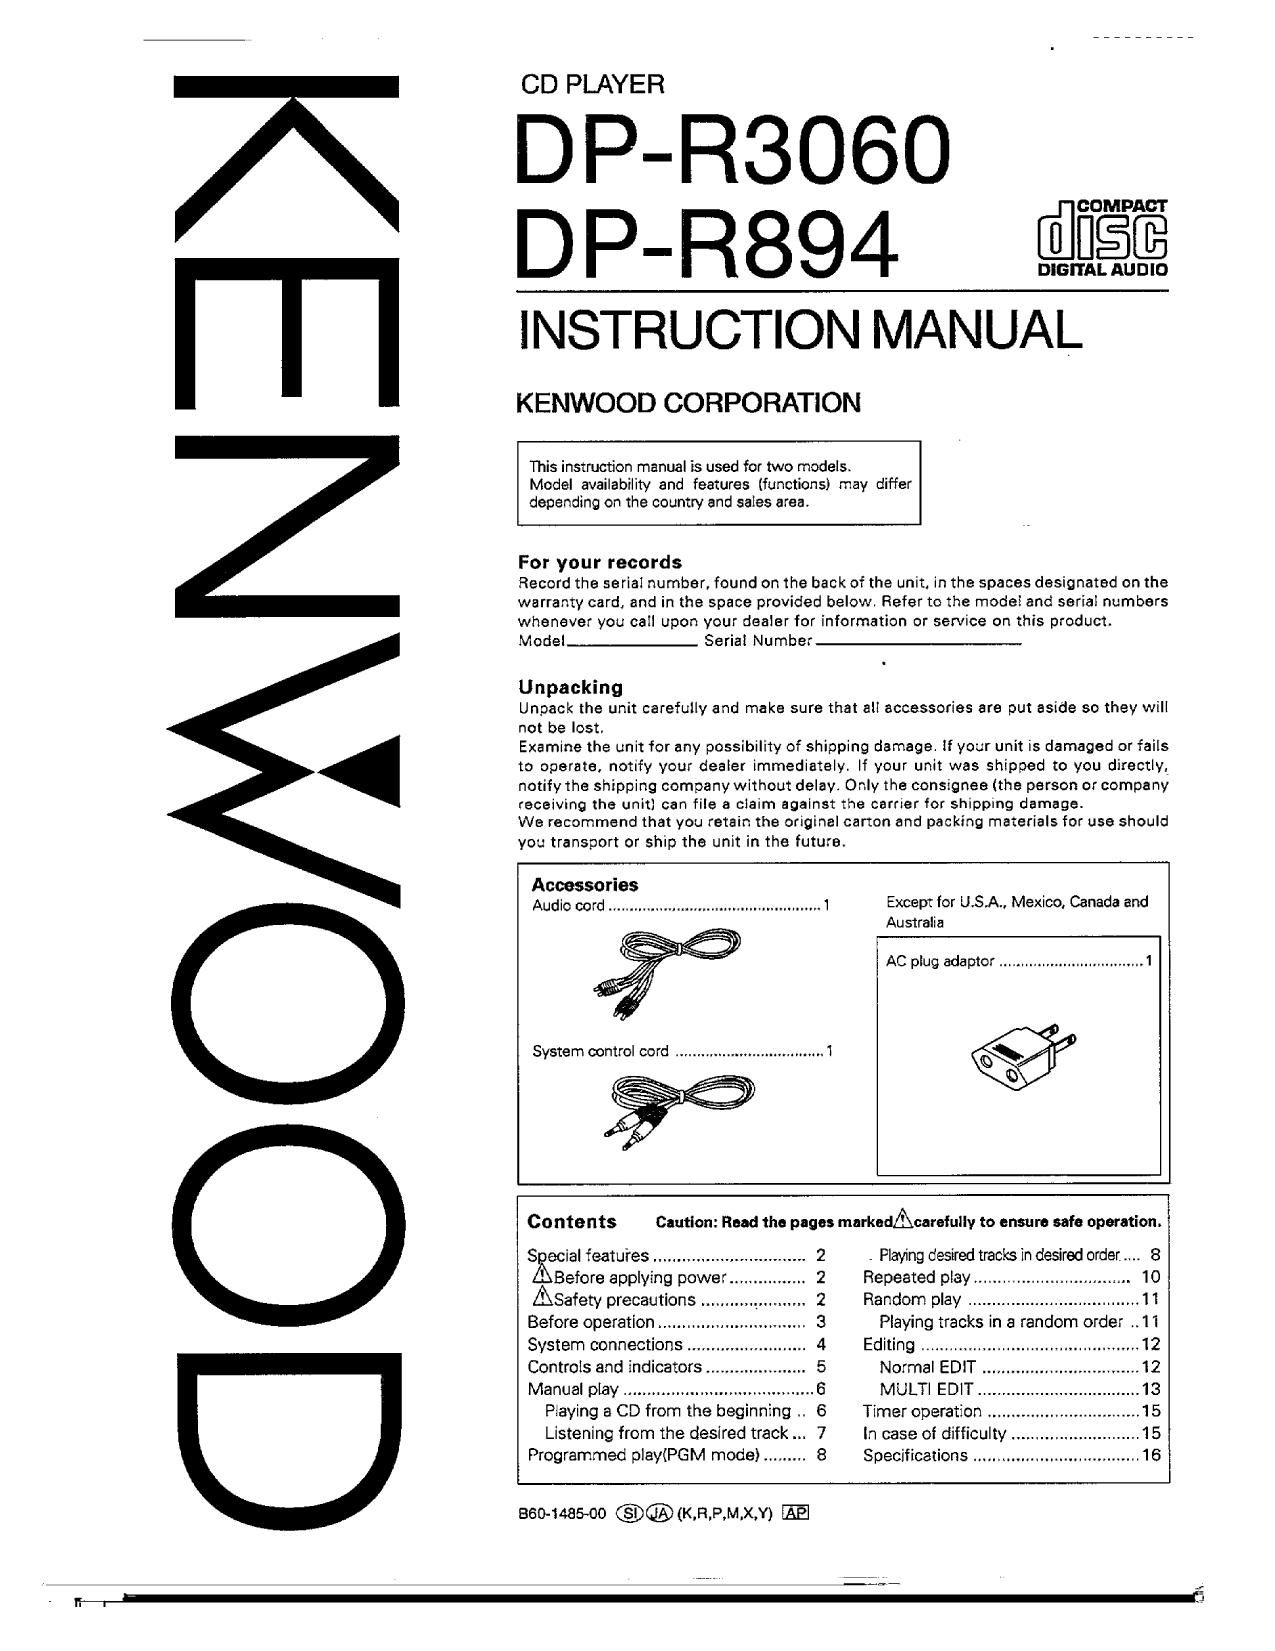 Kenwood DPR 3060 Owners Manual